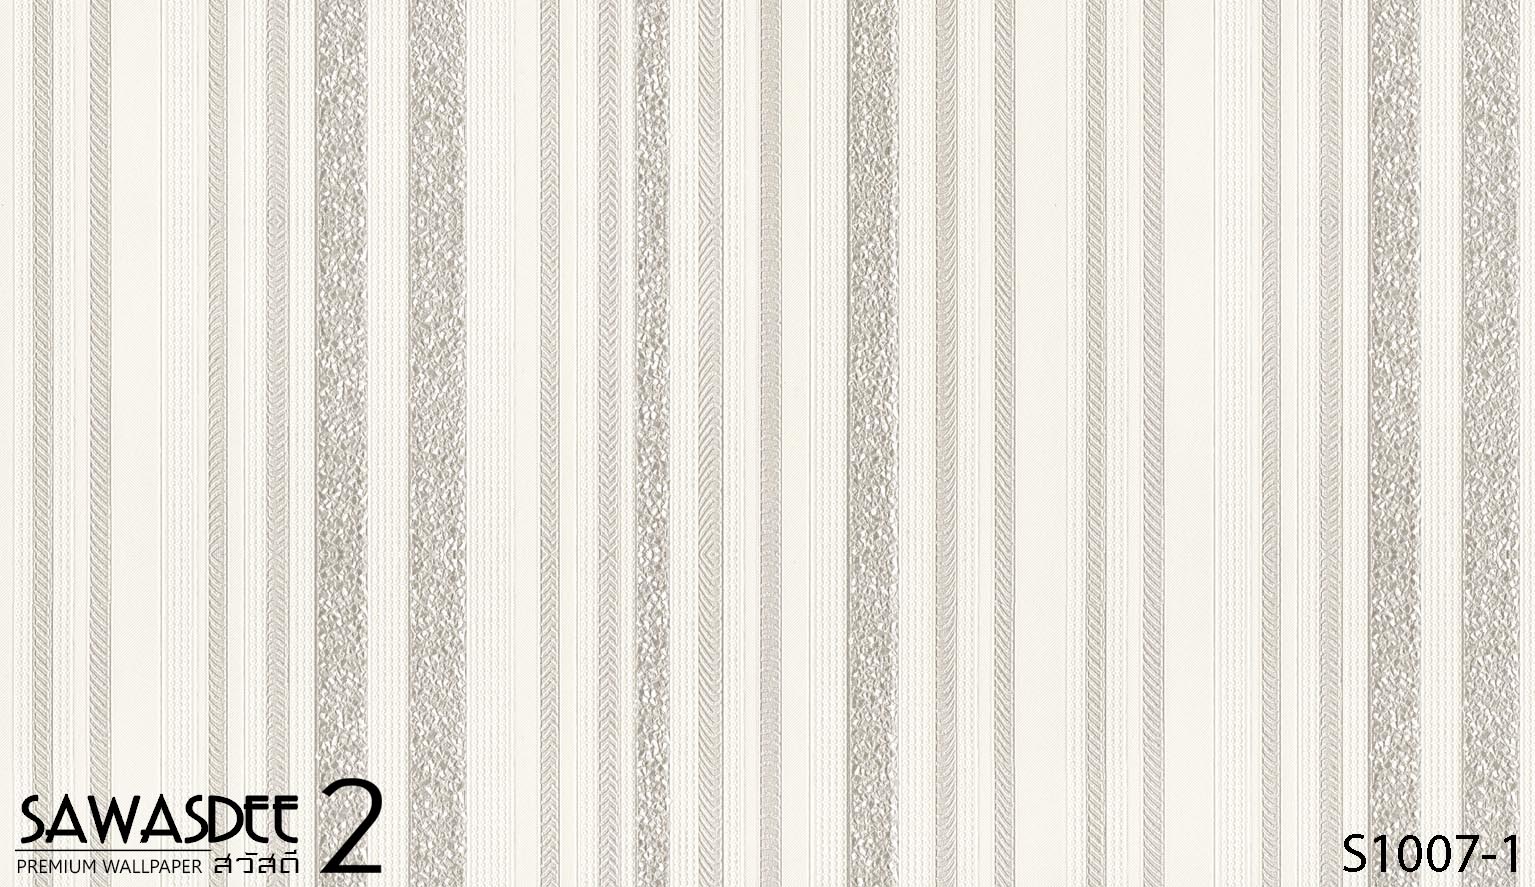 Wallpaper (SAWASDEE 2) S1007-1